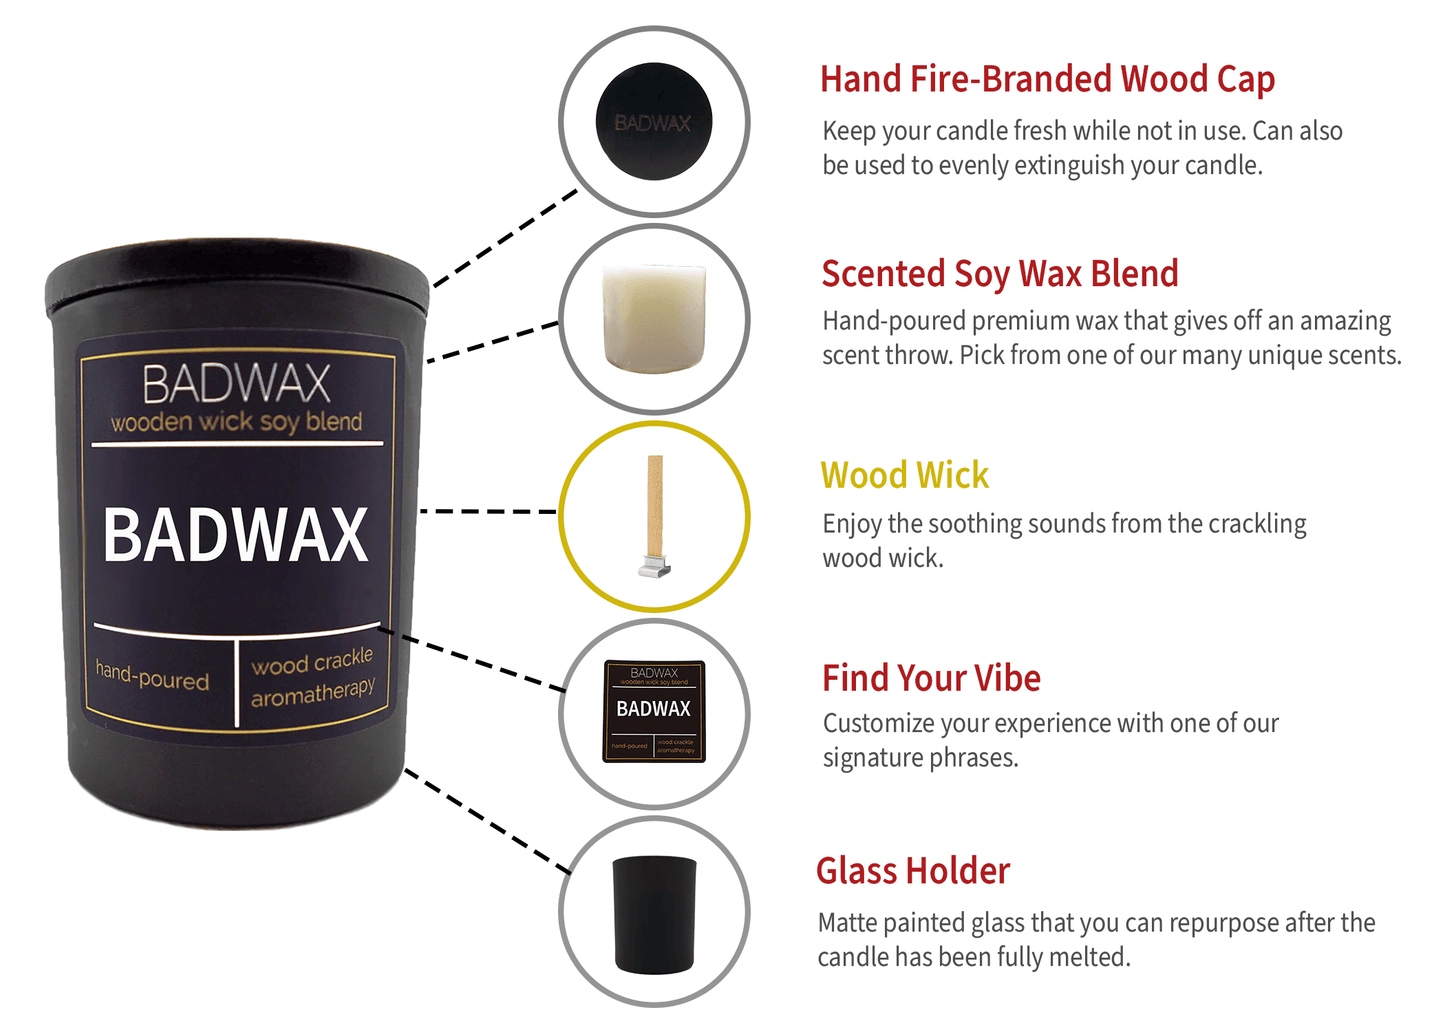 Vanilla + Sandalwood + Vetiver | Woodwick Candle - BADWAX